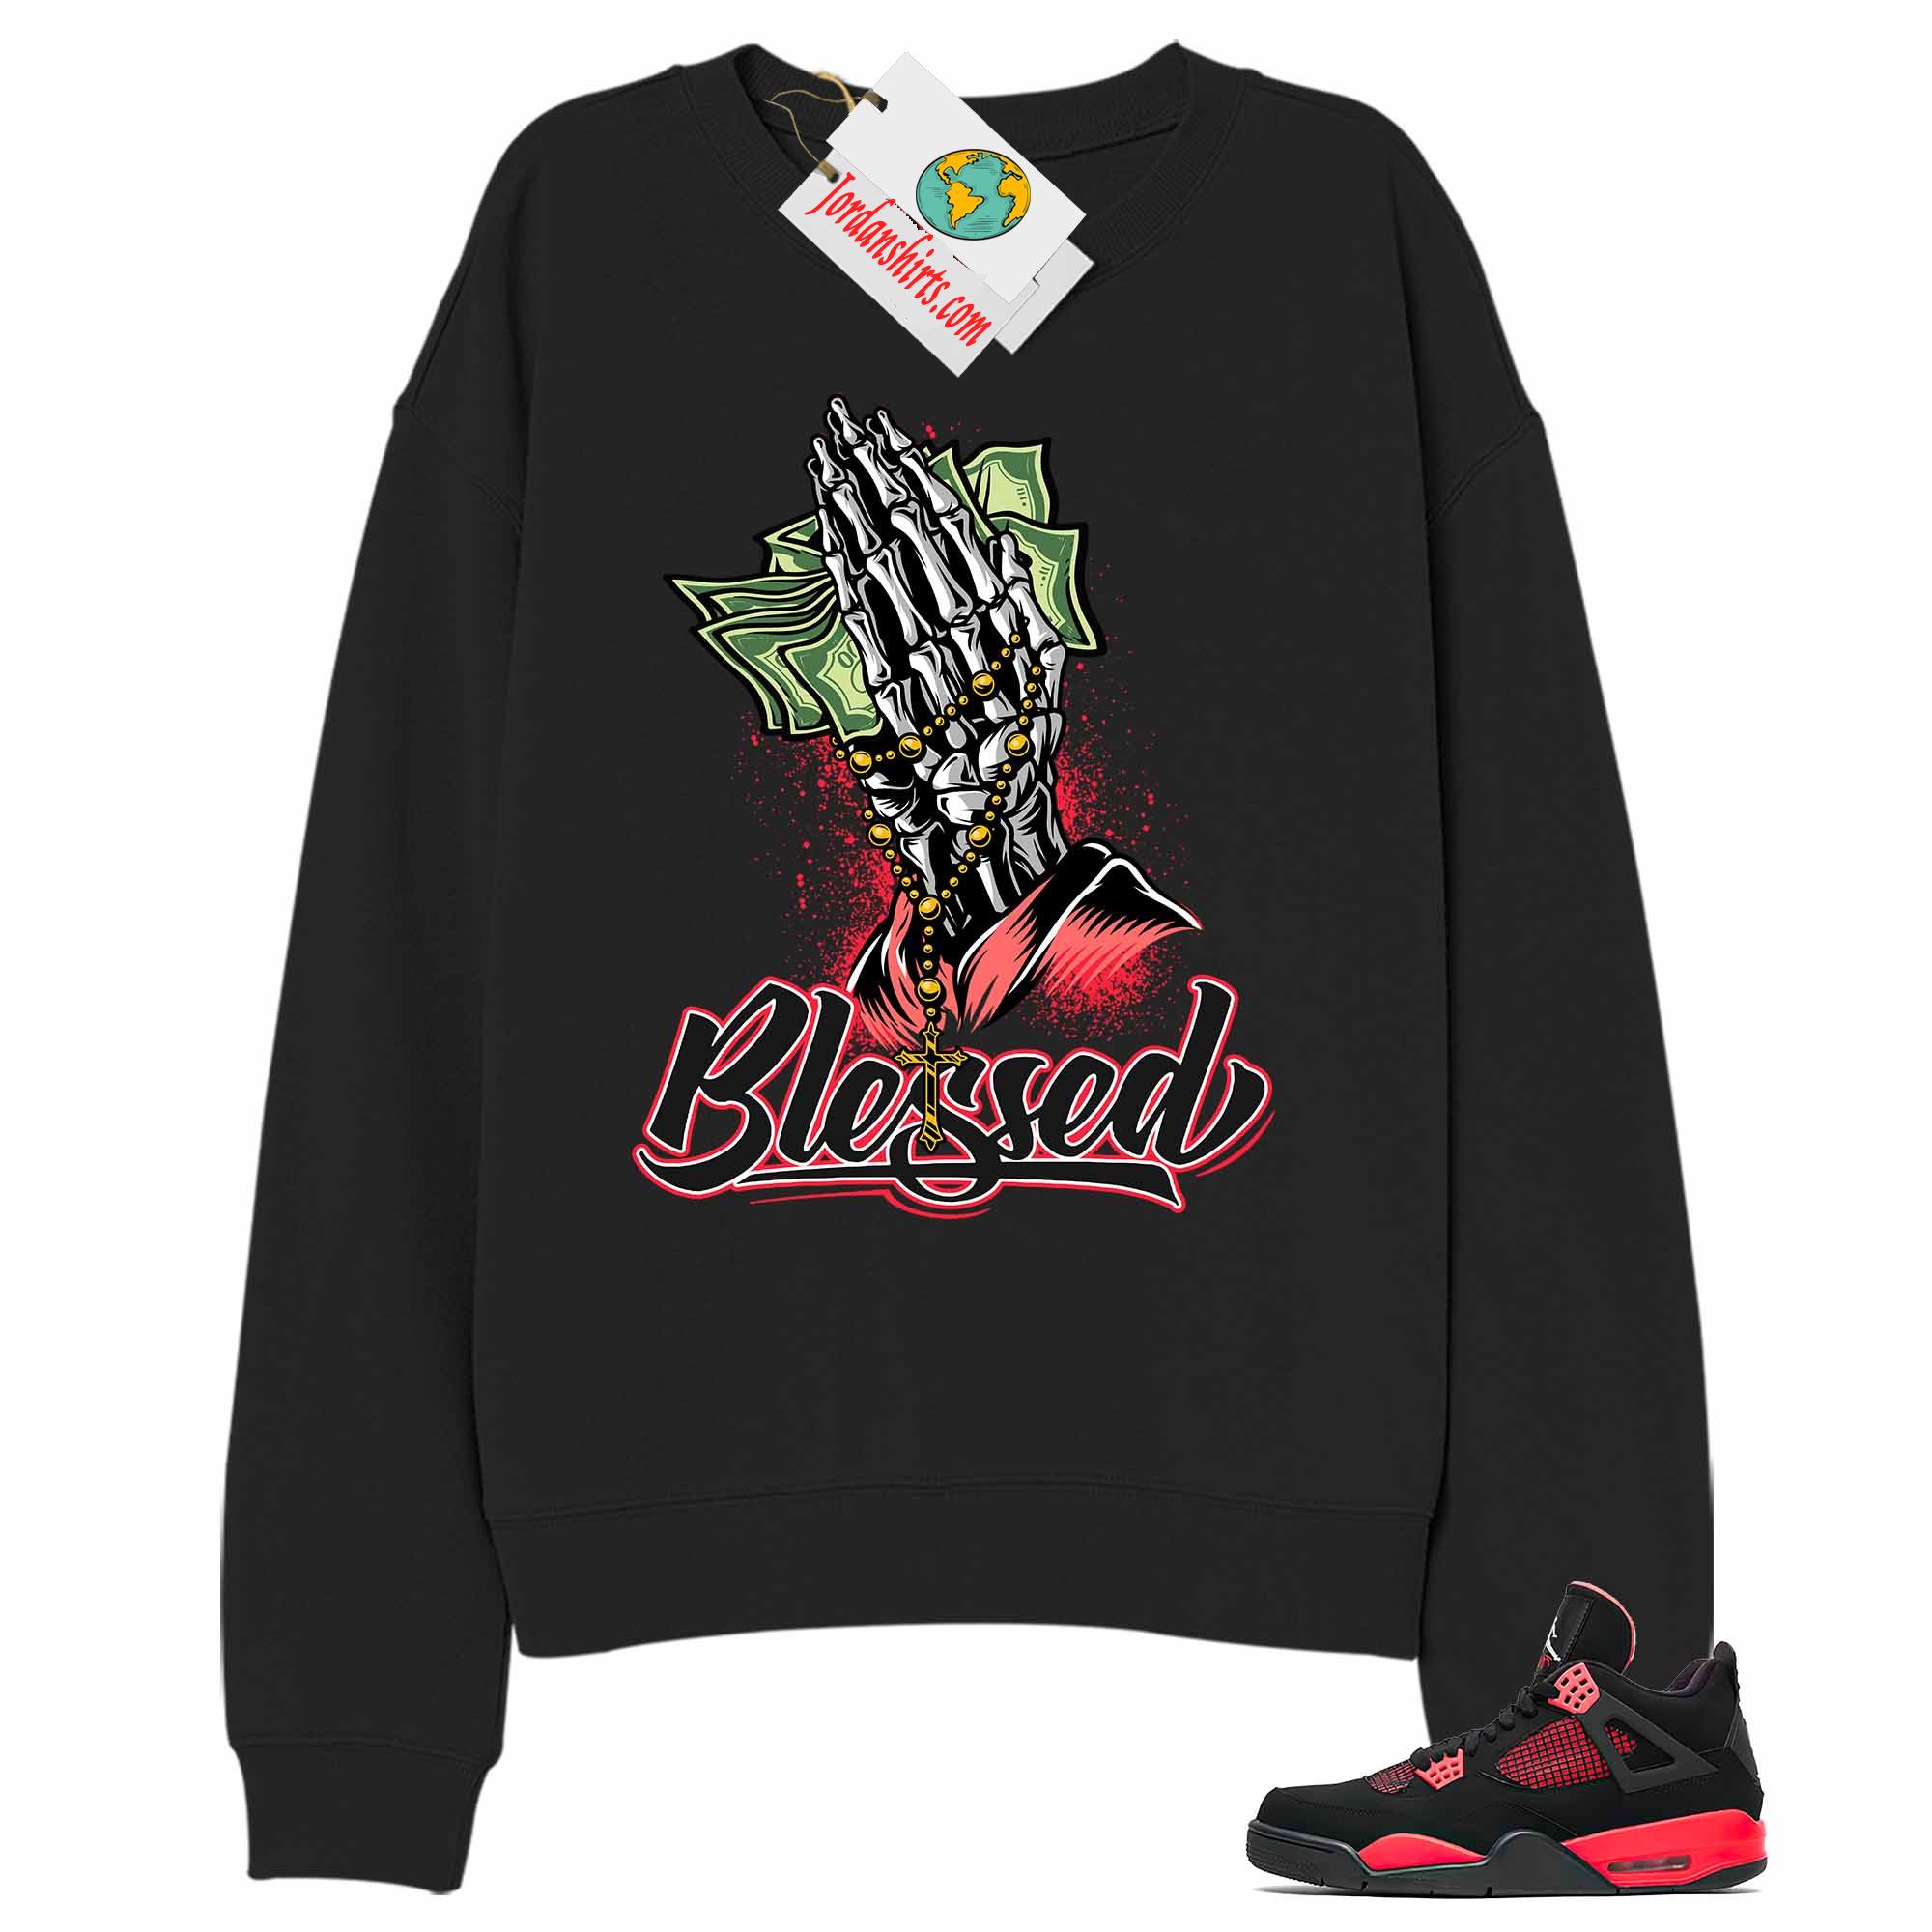 Jordan 4 Sweatshirt, Blessed Pray Hand Money Black Sweatshirt Air Jordan 4 Red Thunder 4s Size Up To 5xl